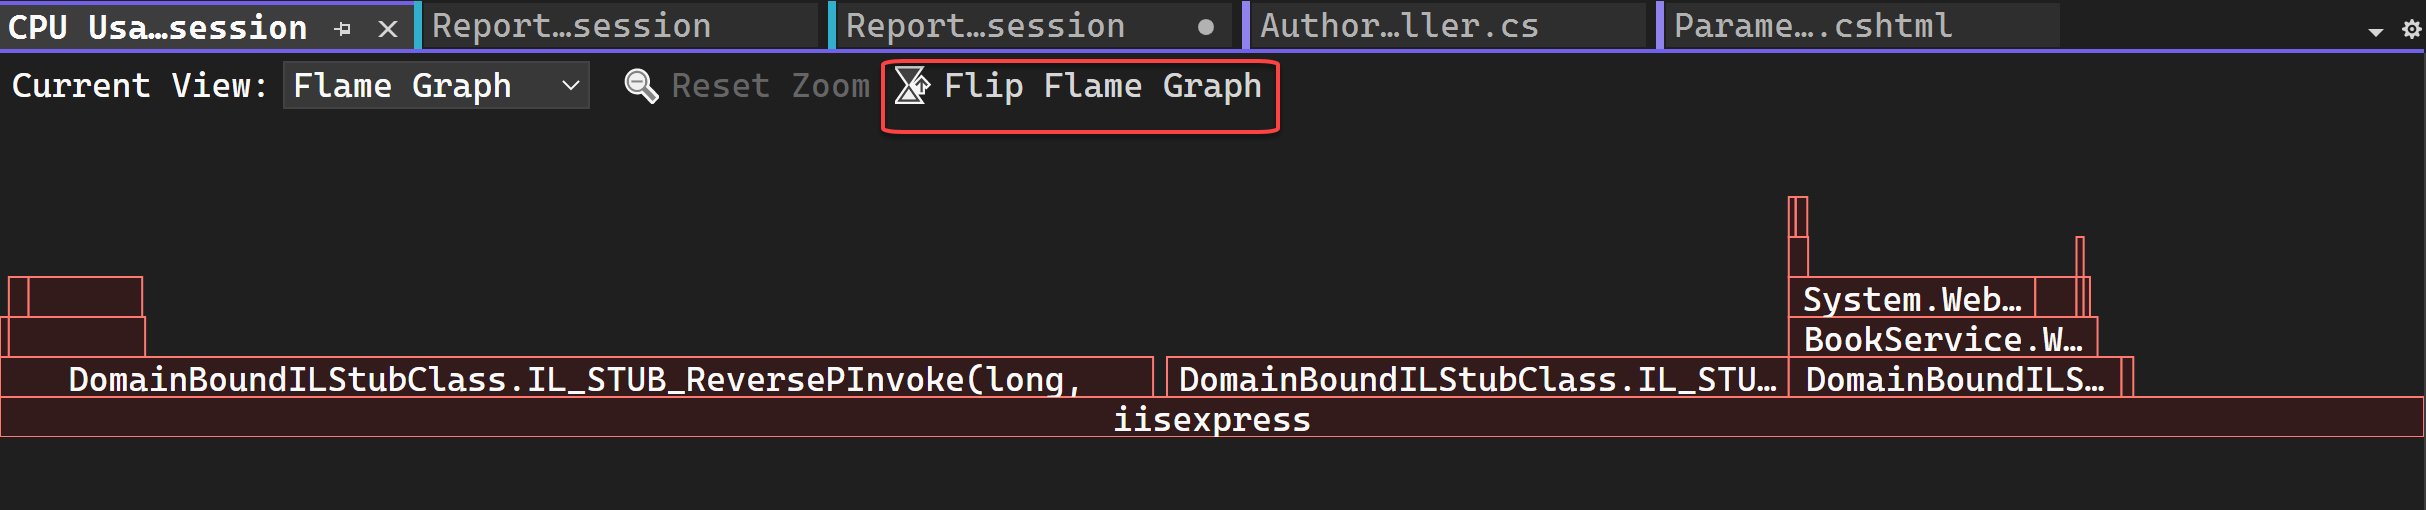 Screenshot che mostra l'opzione Flip Flame Graph selezionata.